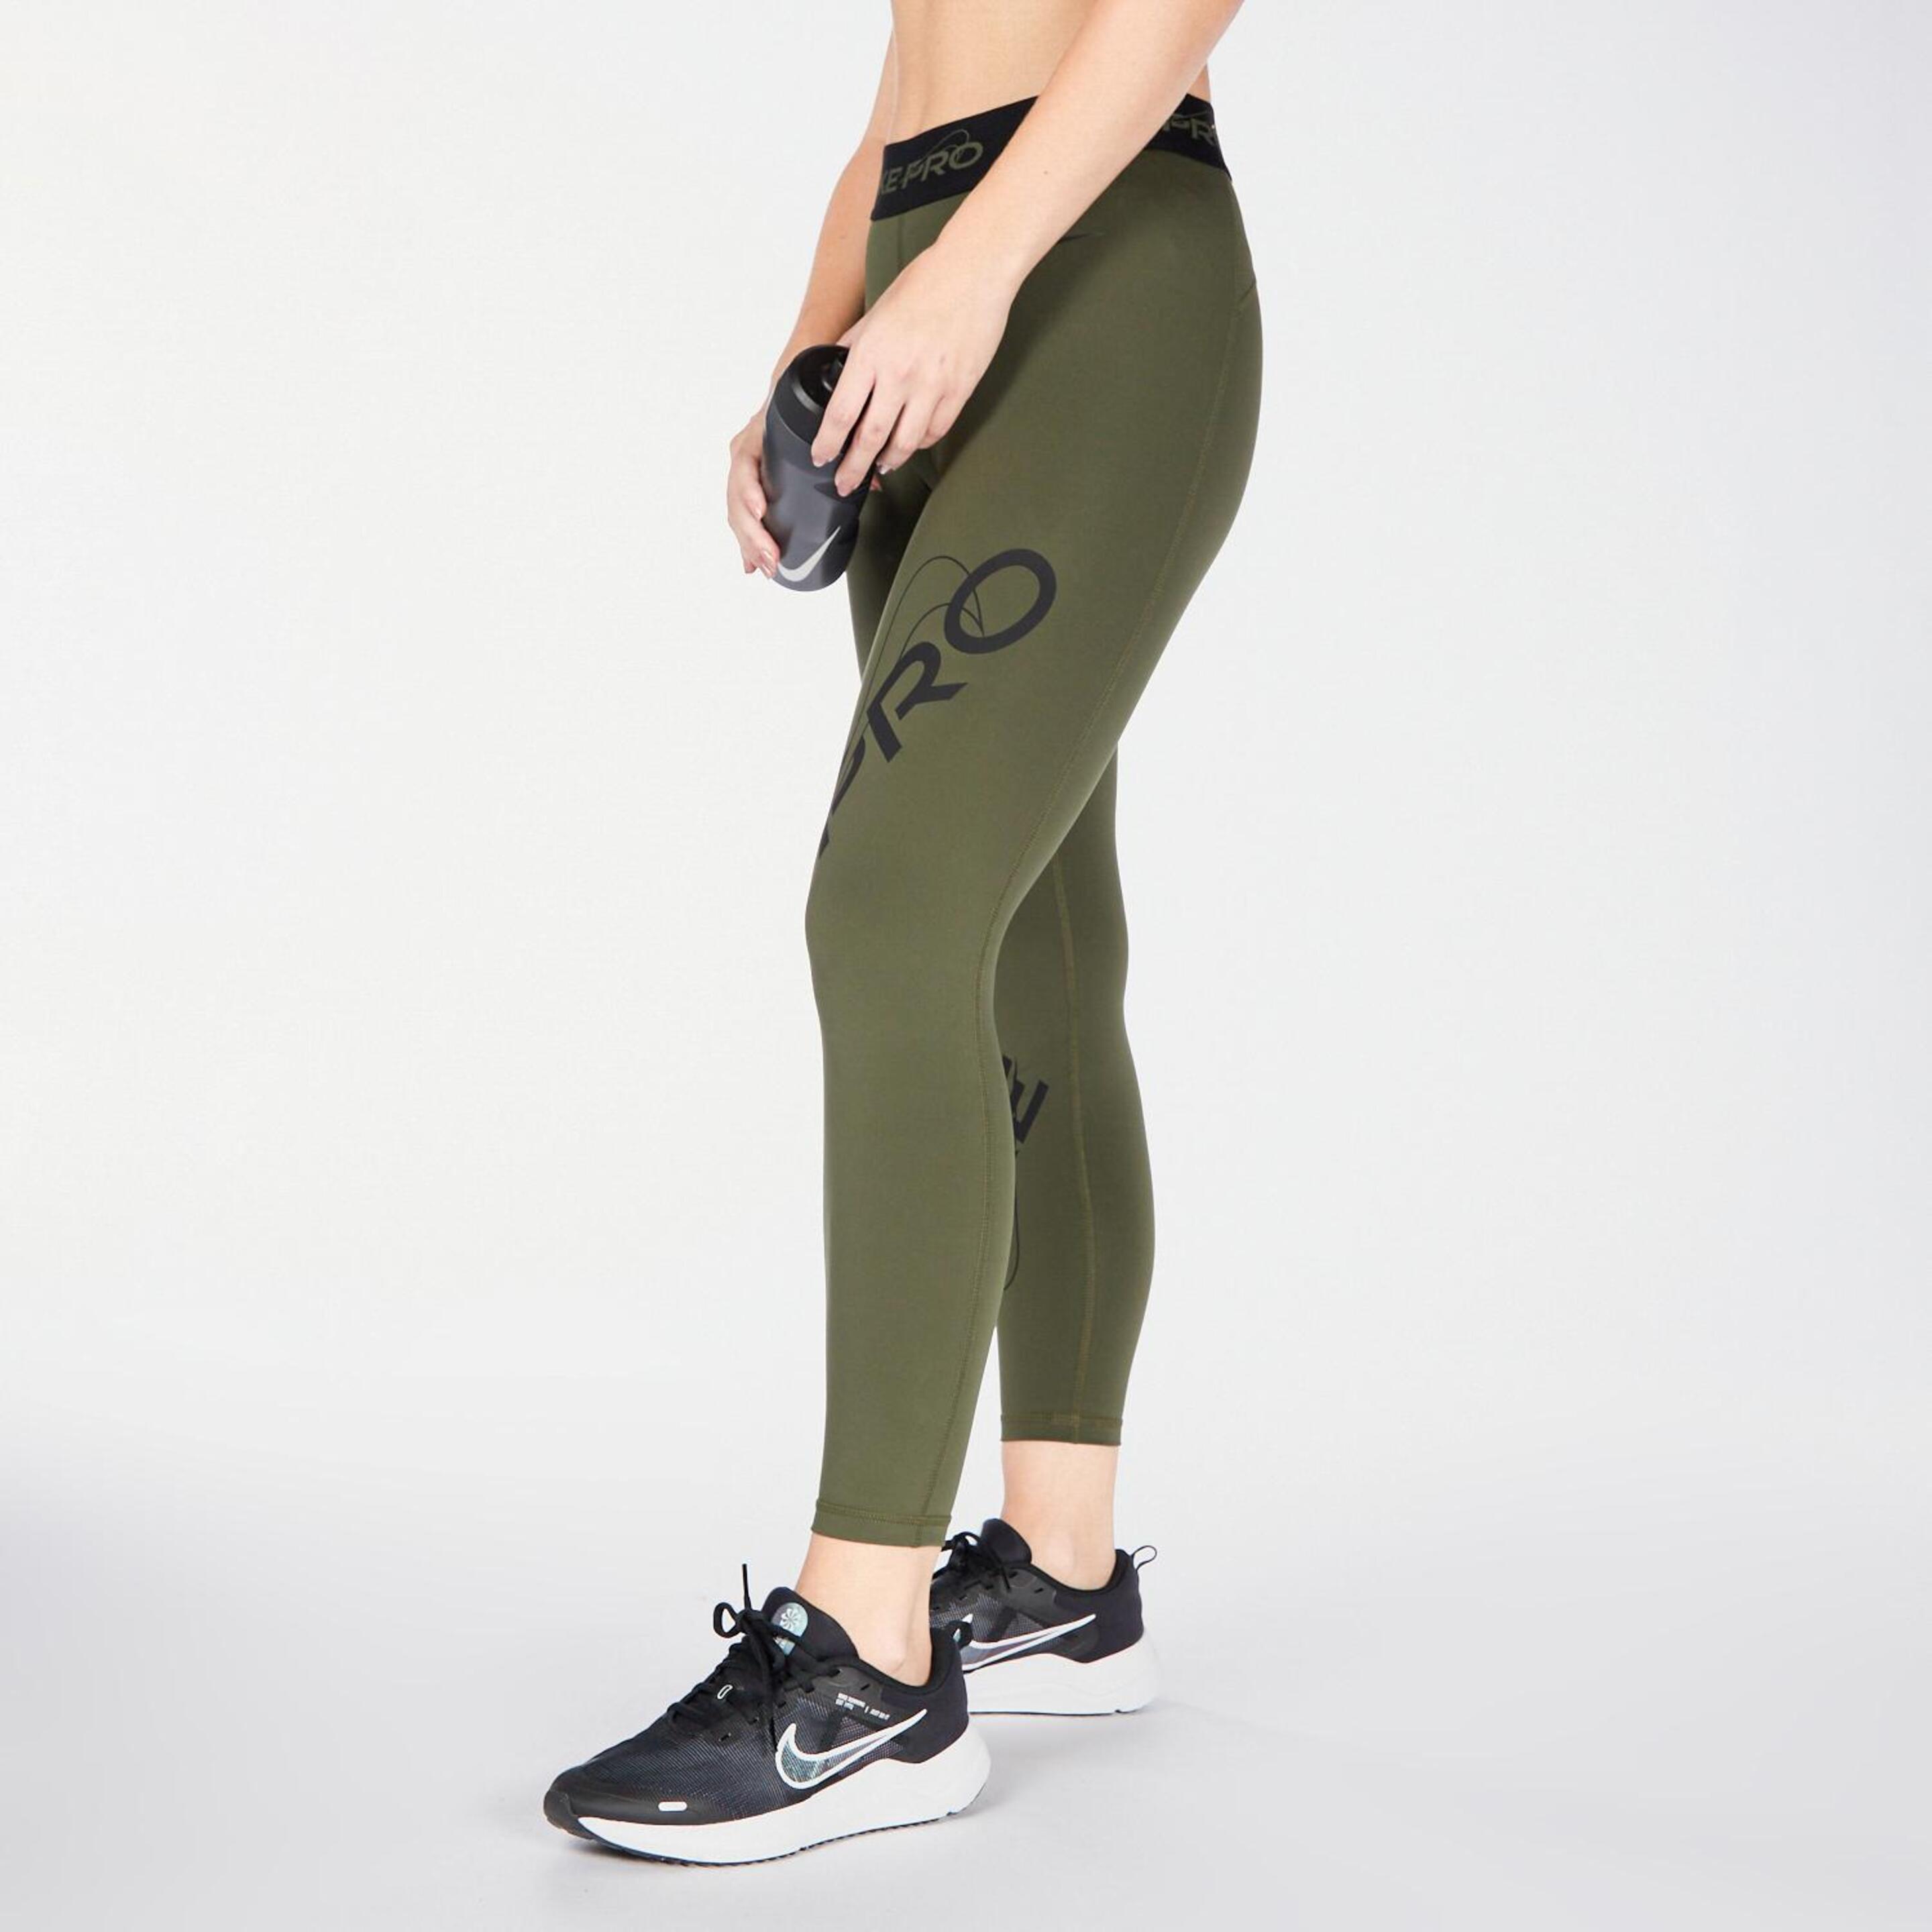 Mallas Nike - Kaki - Mallas Fitness Mujer